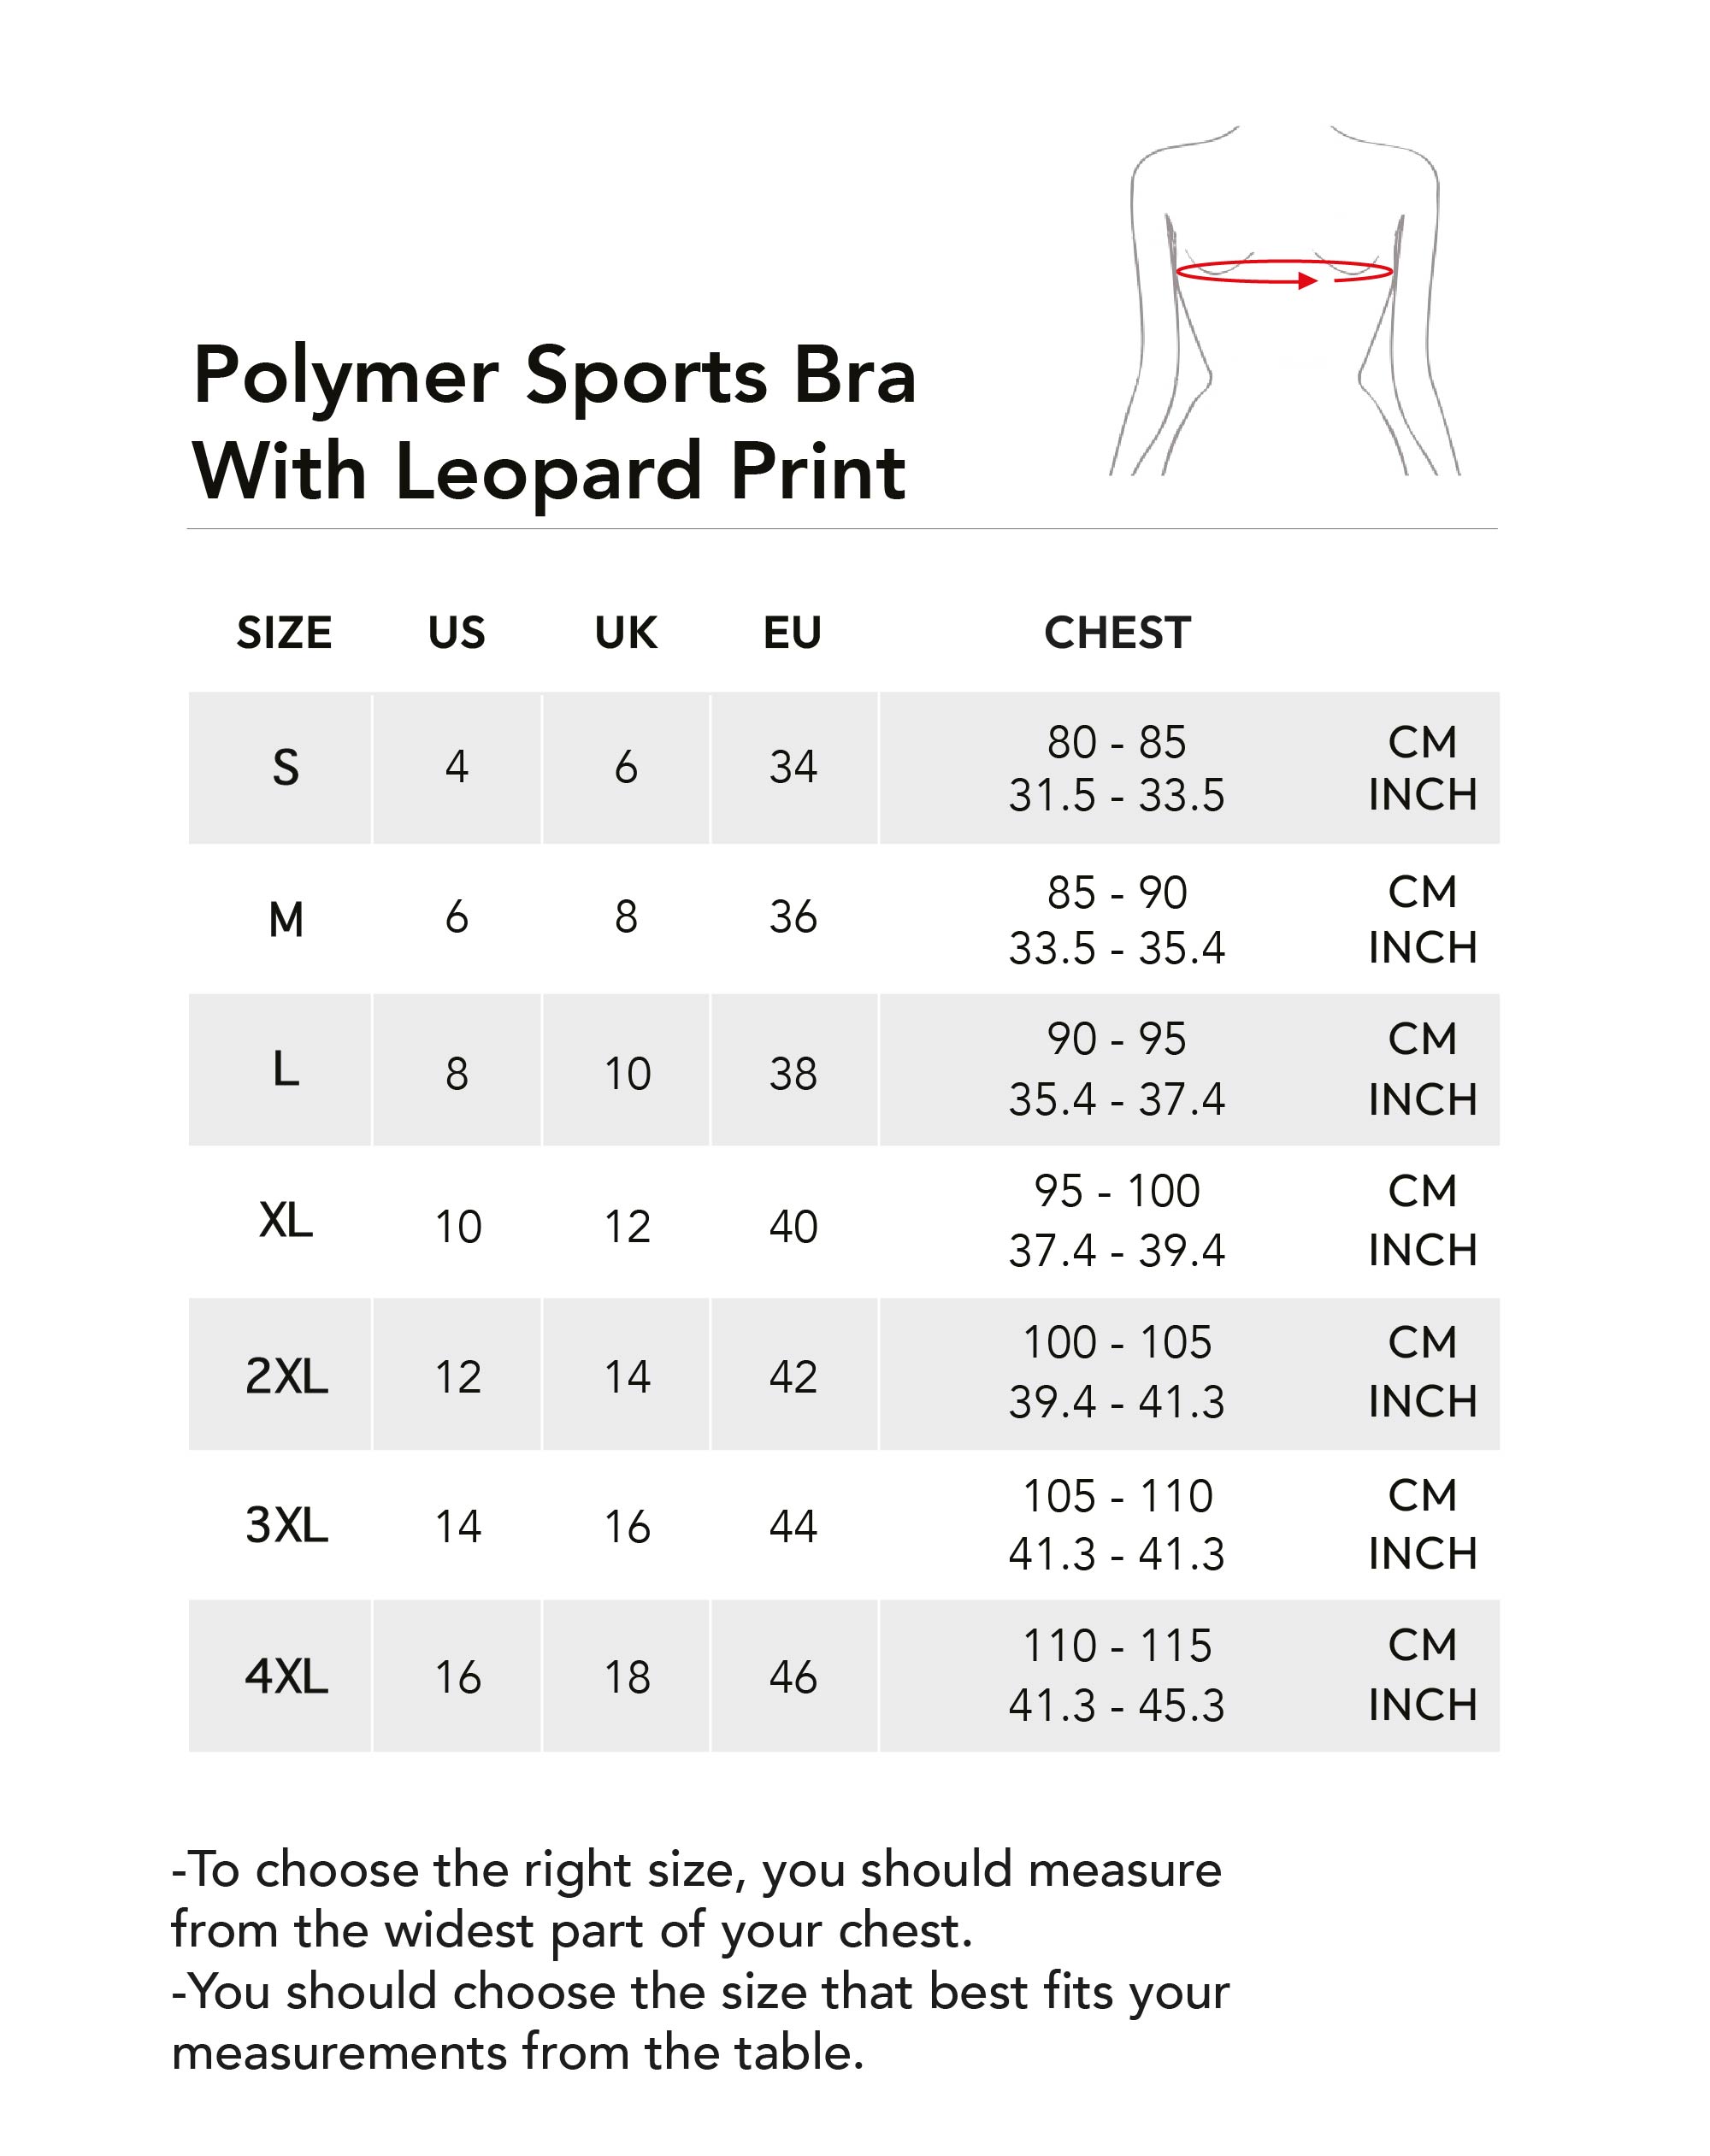 polymer_sports_bra_with_leopard_print_.jpg (249 KB)